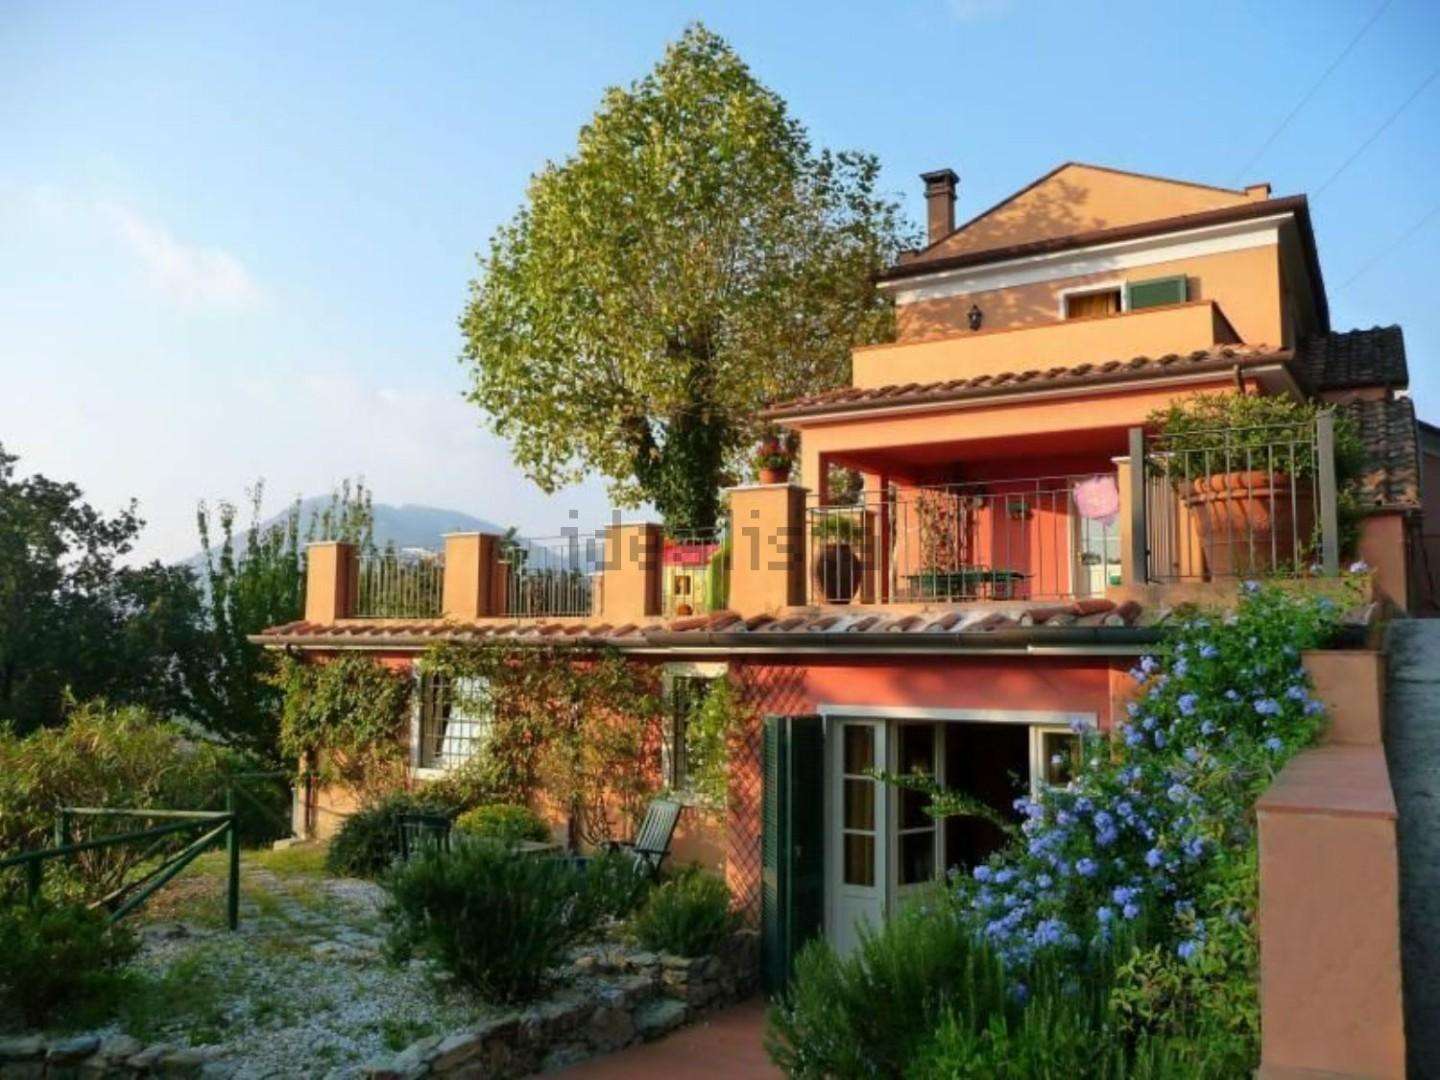 Casa Bi - Trifamiliare in Vendita a Carrara Via di Nazzano,